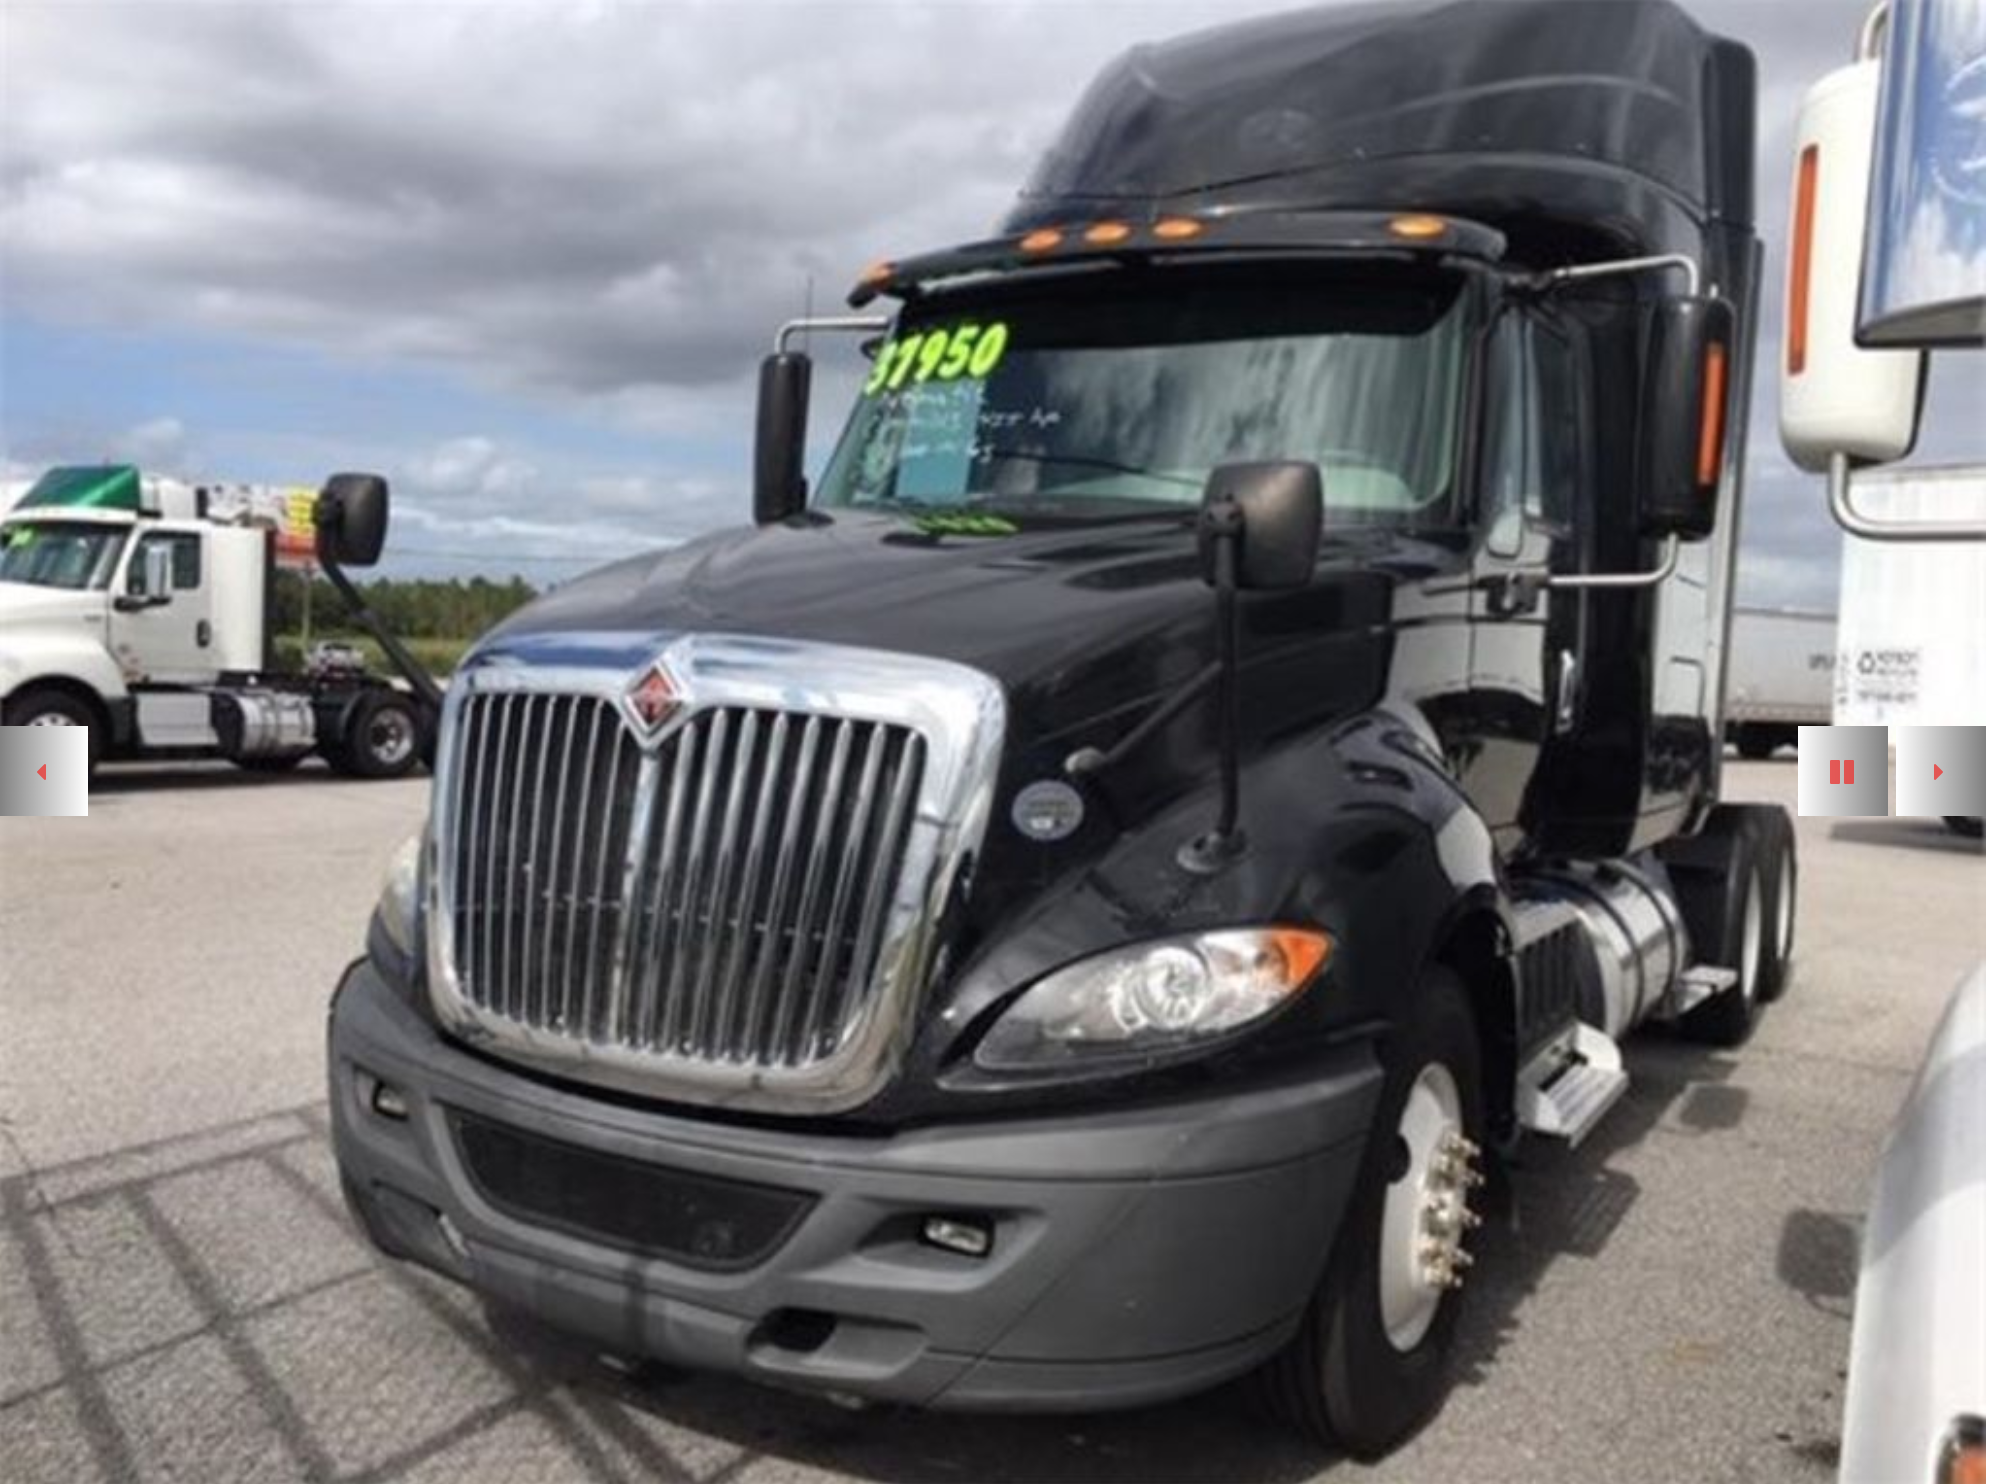 Courtesy. Under Oscar Horton's leadership, Tampa, Florida-based Sun State International Trucks LLC has grown from $25 million in revenue in 2000 to $160 million in 2019.